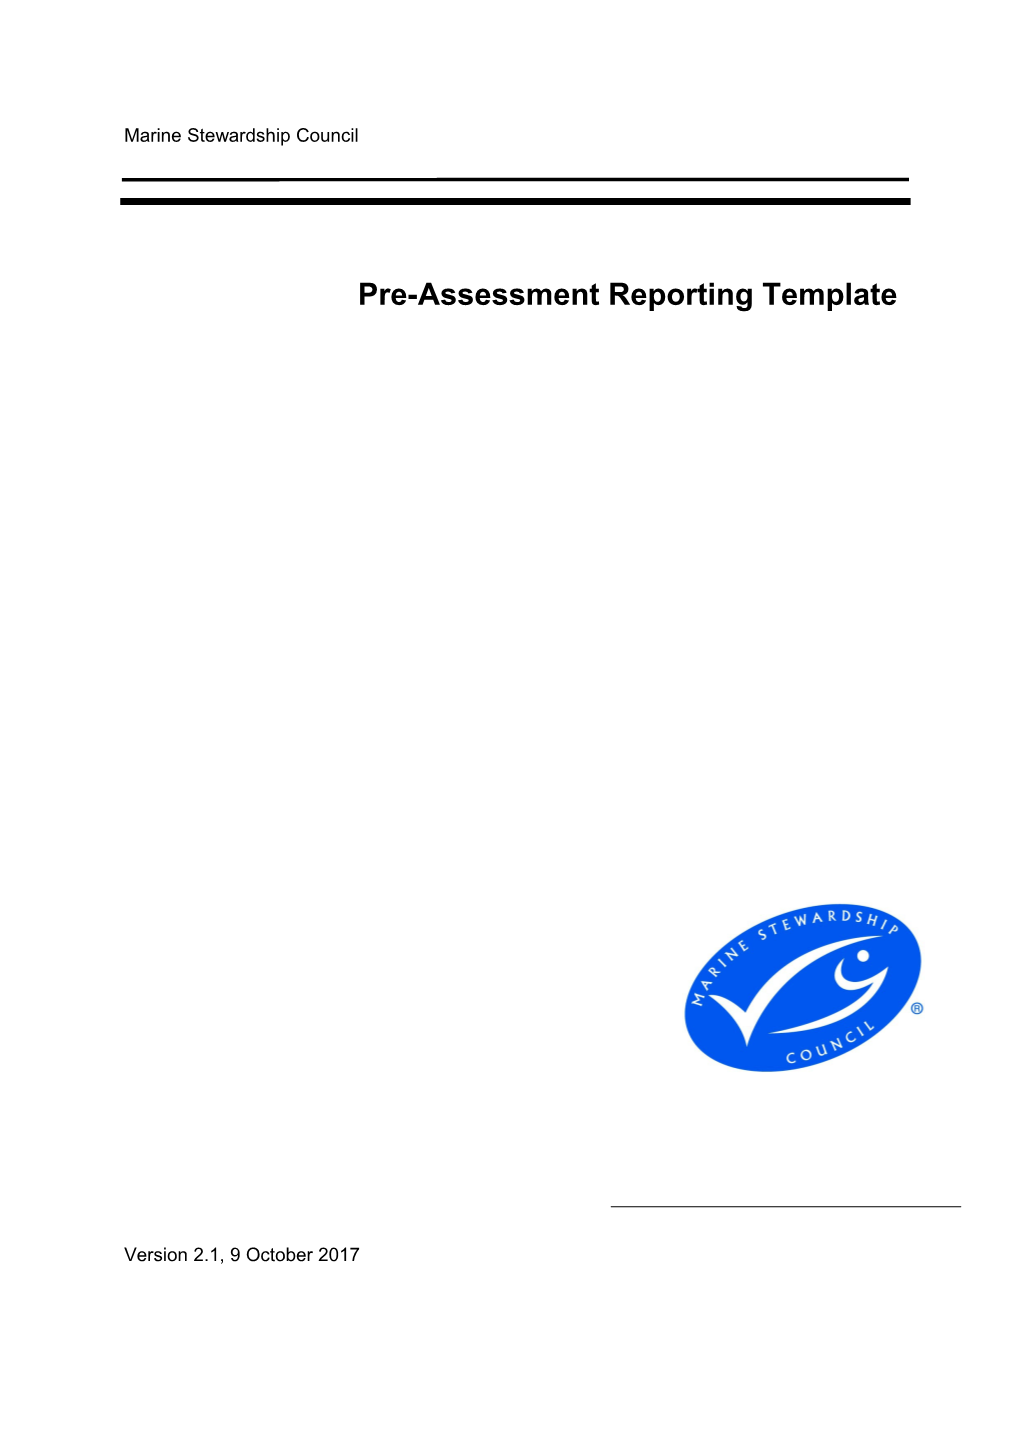 Pre-Assessment Reporting Template